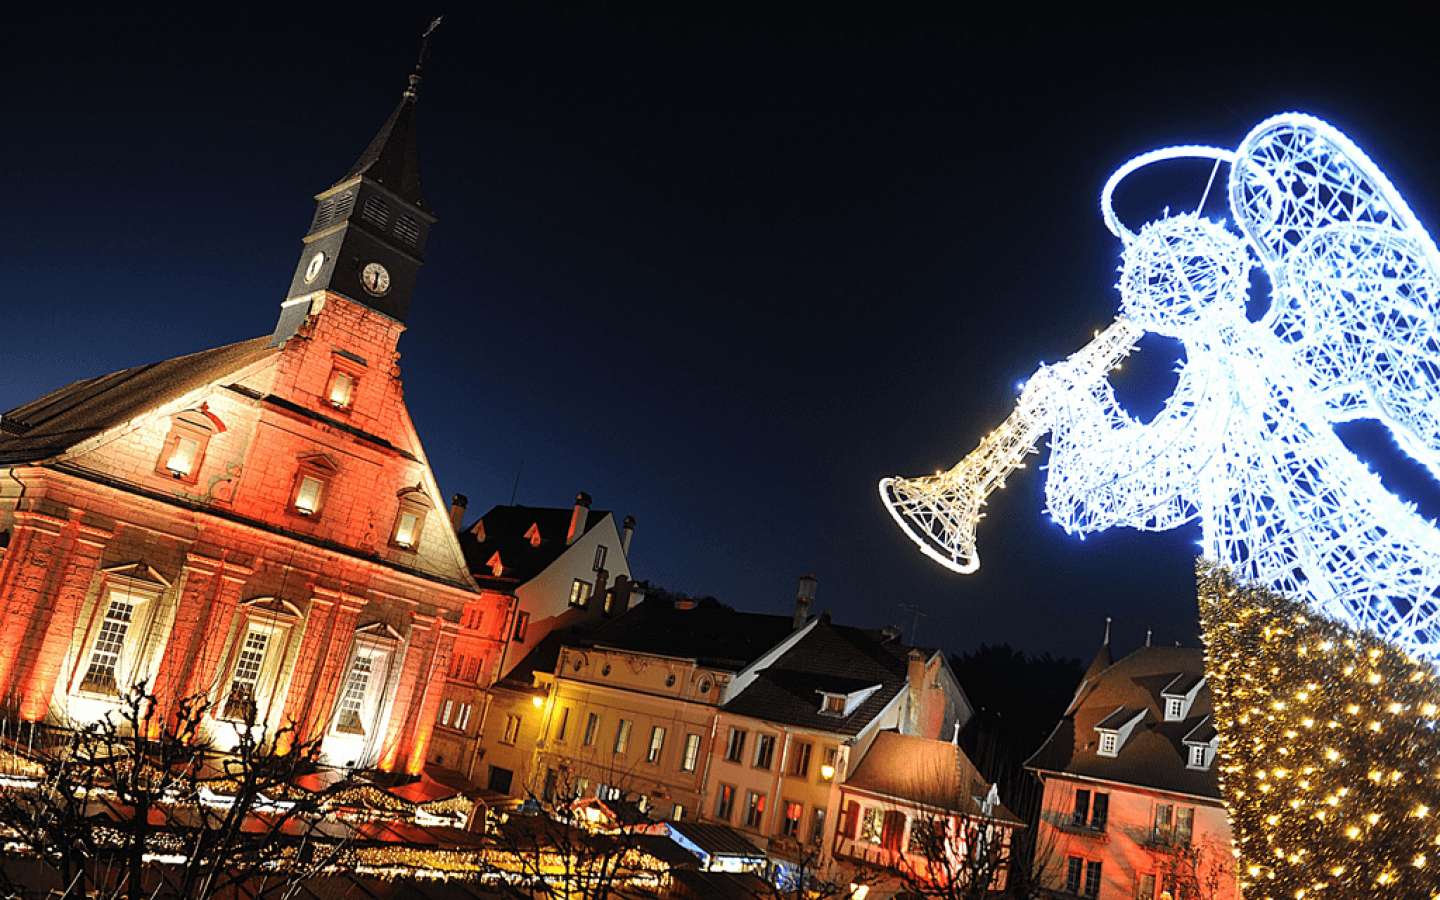 The Christmas Lights of Montbéliard